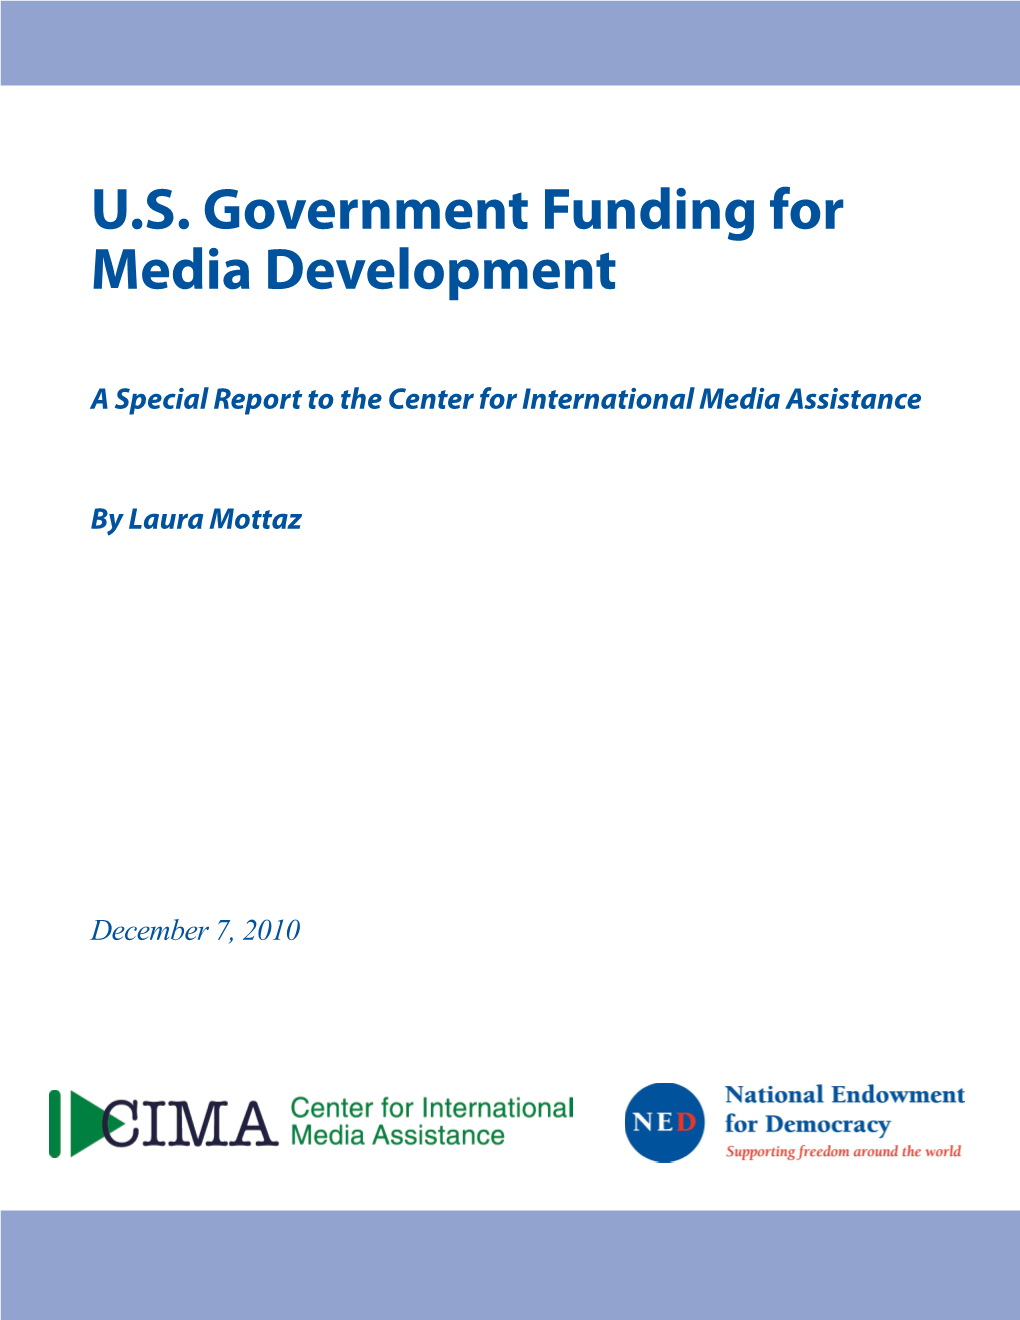 U.S. Government Funding for Media Development